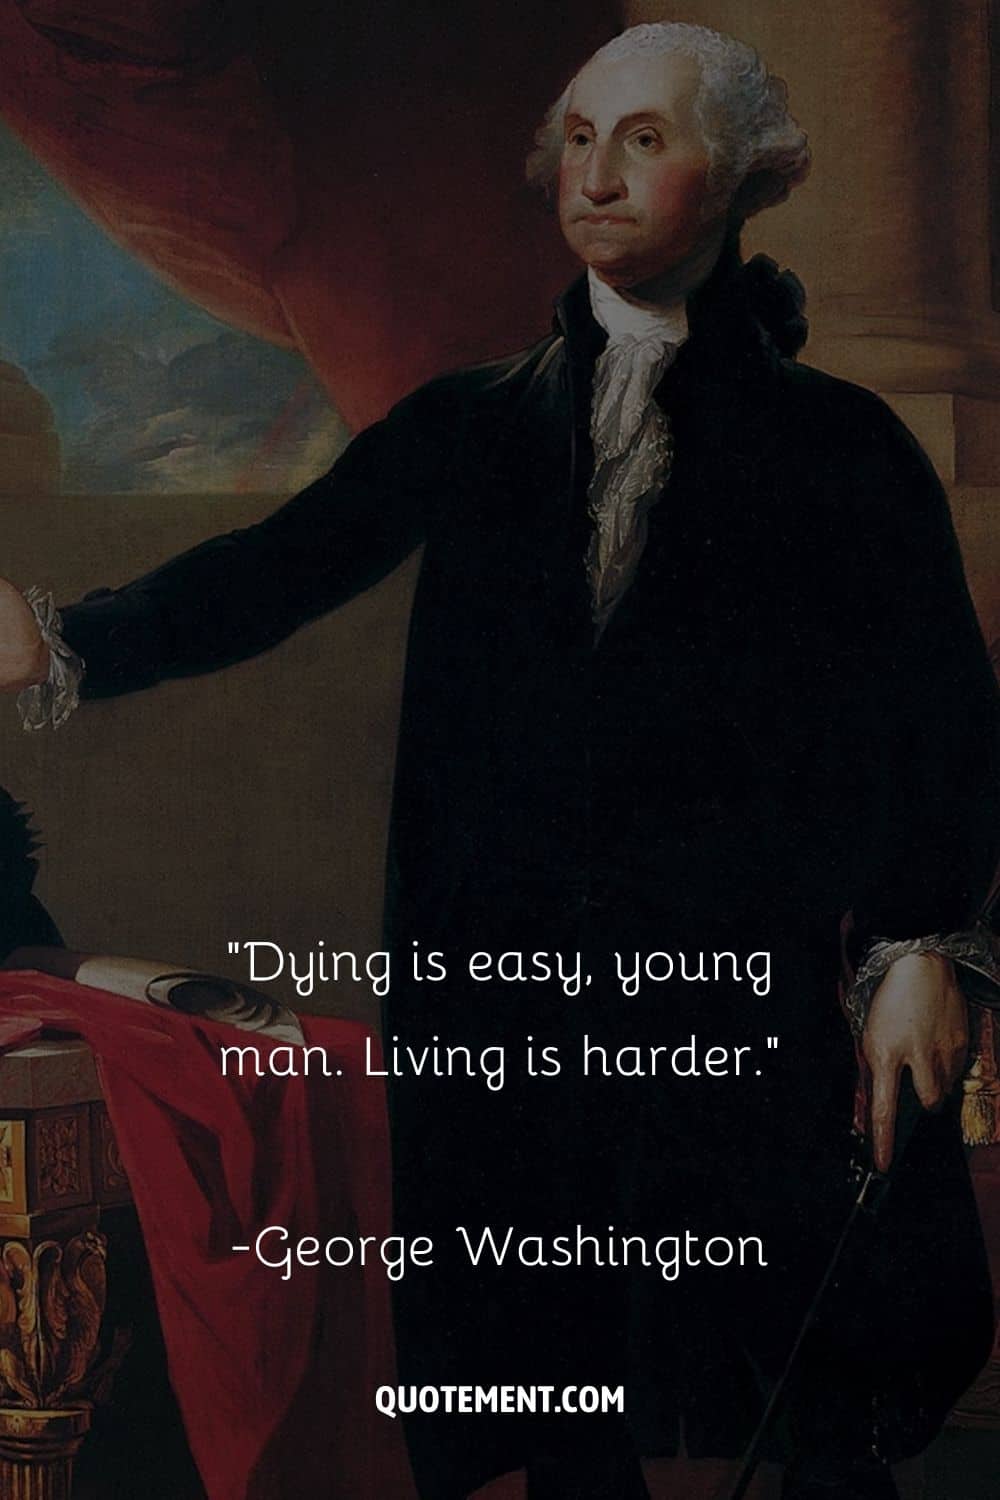 an old george washington painting representing hamilton lyrics
